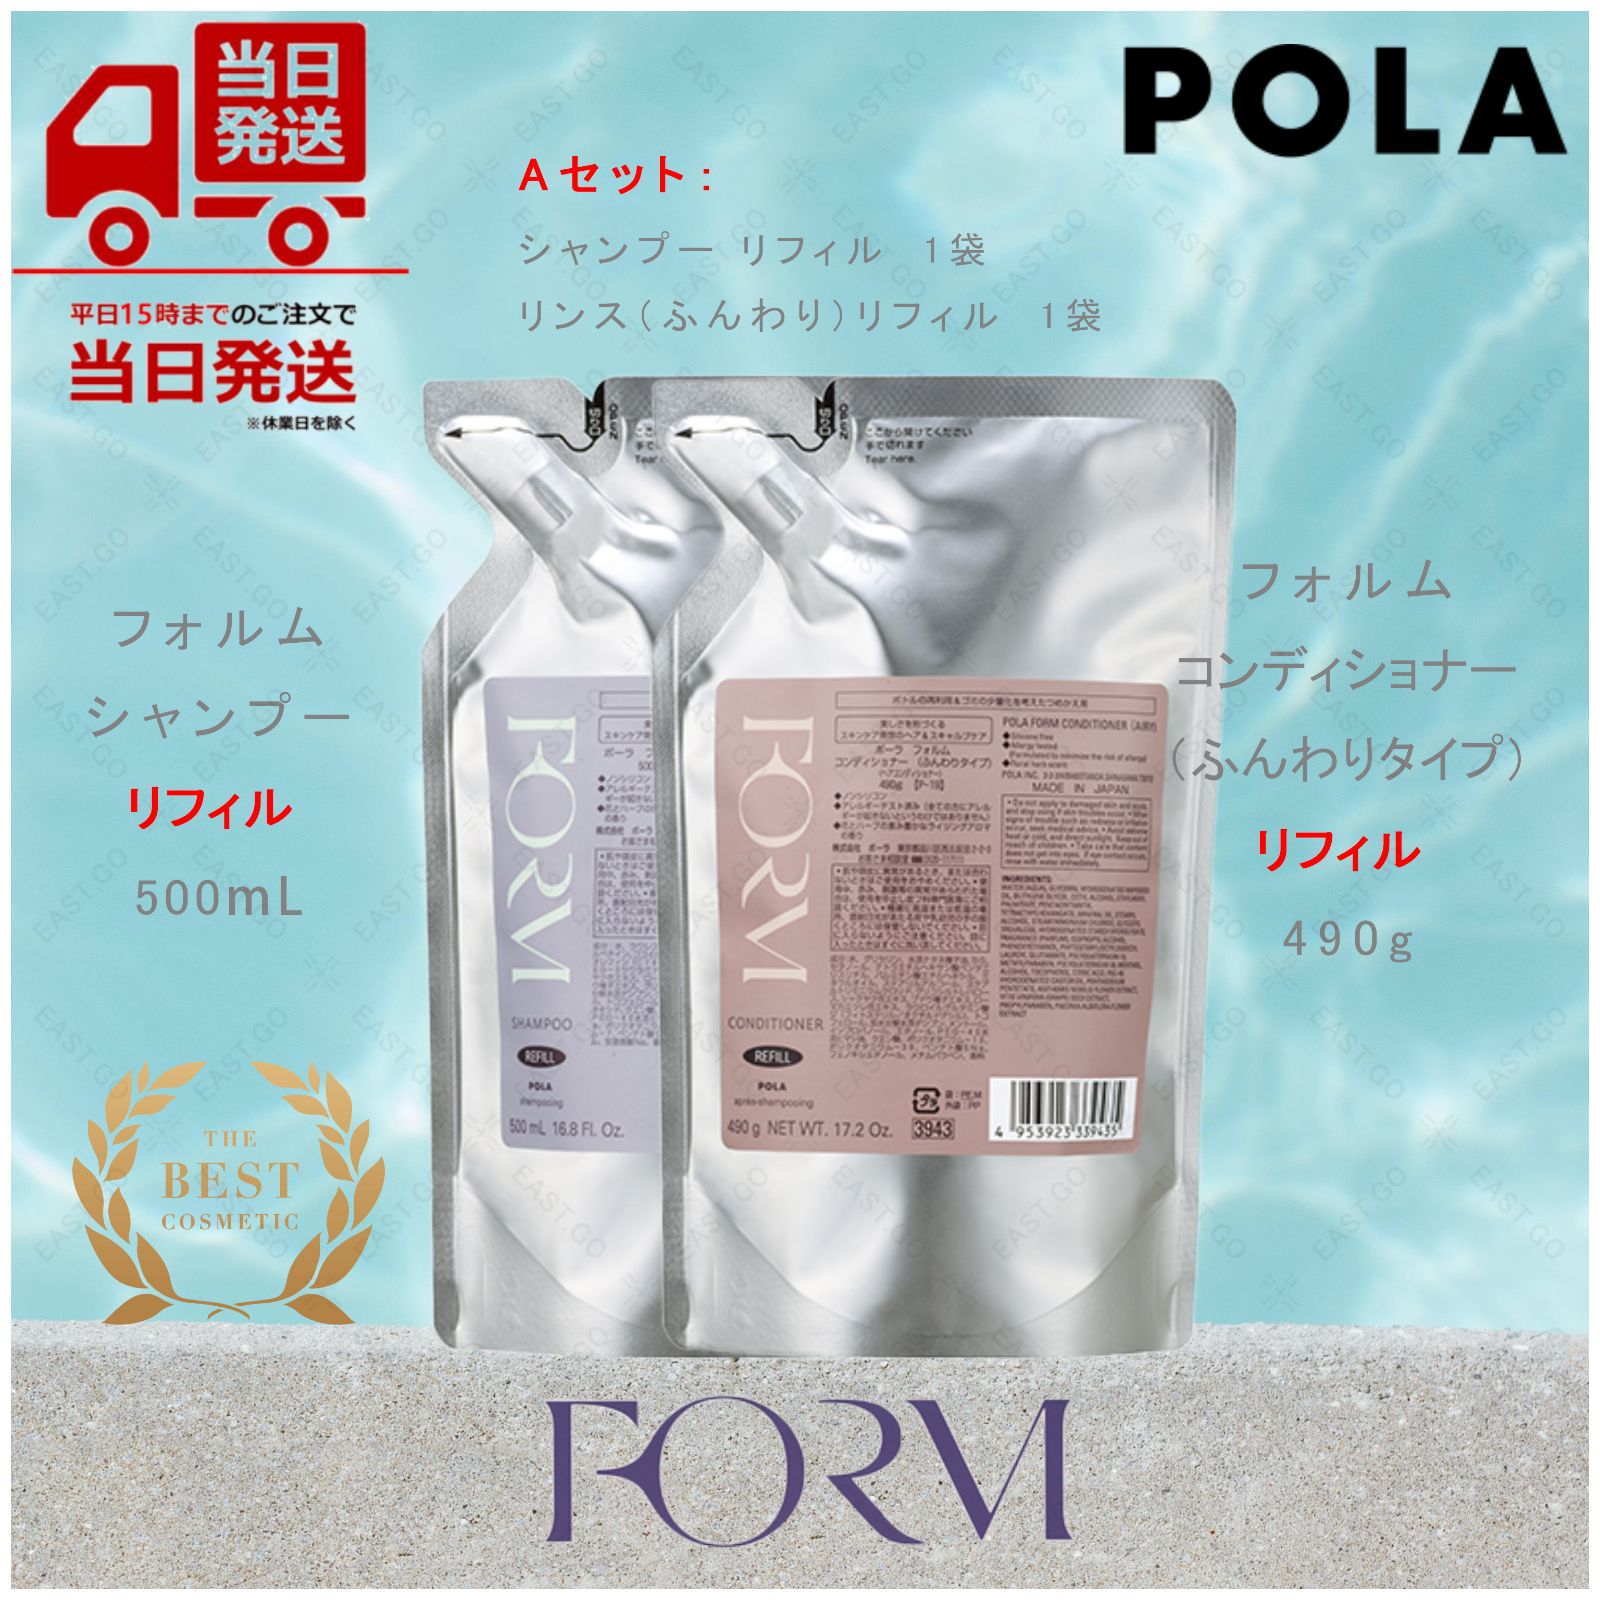 POLA ポーラ フォルム シャンプー✙コンディショナー 詰替え2袋セット メルカリ